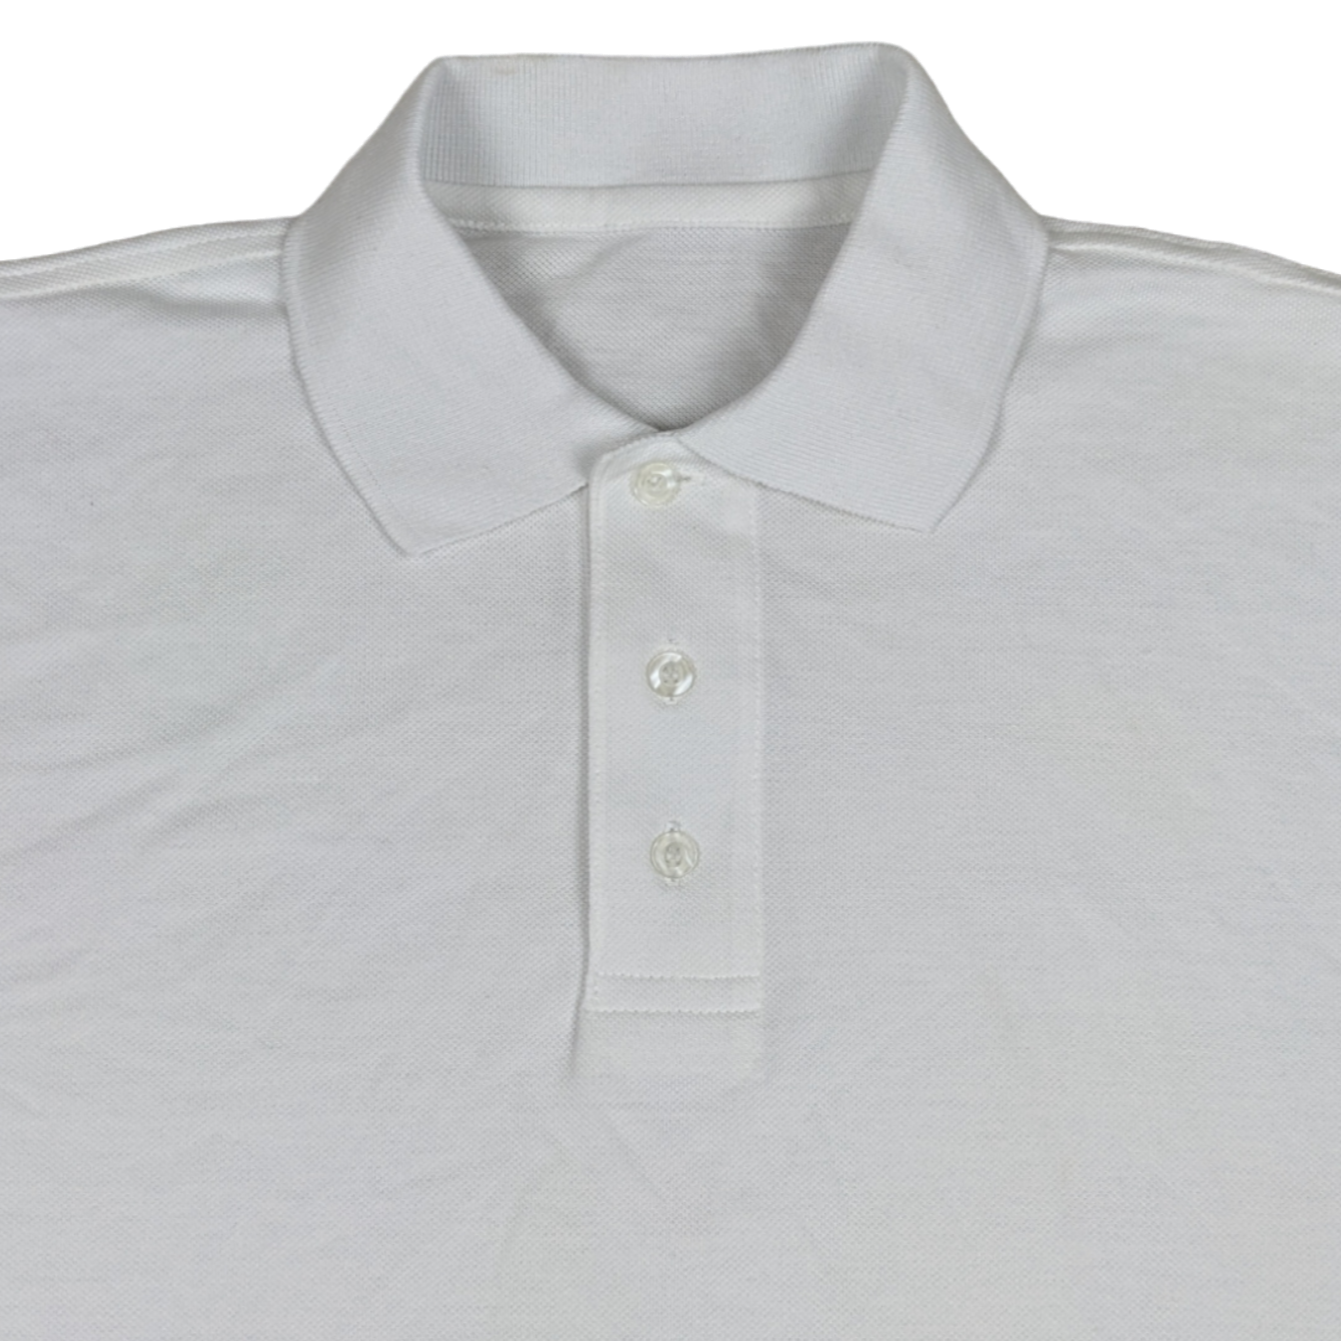 British Army White Polo Style Shirt